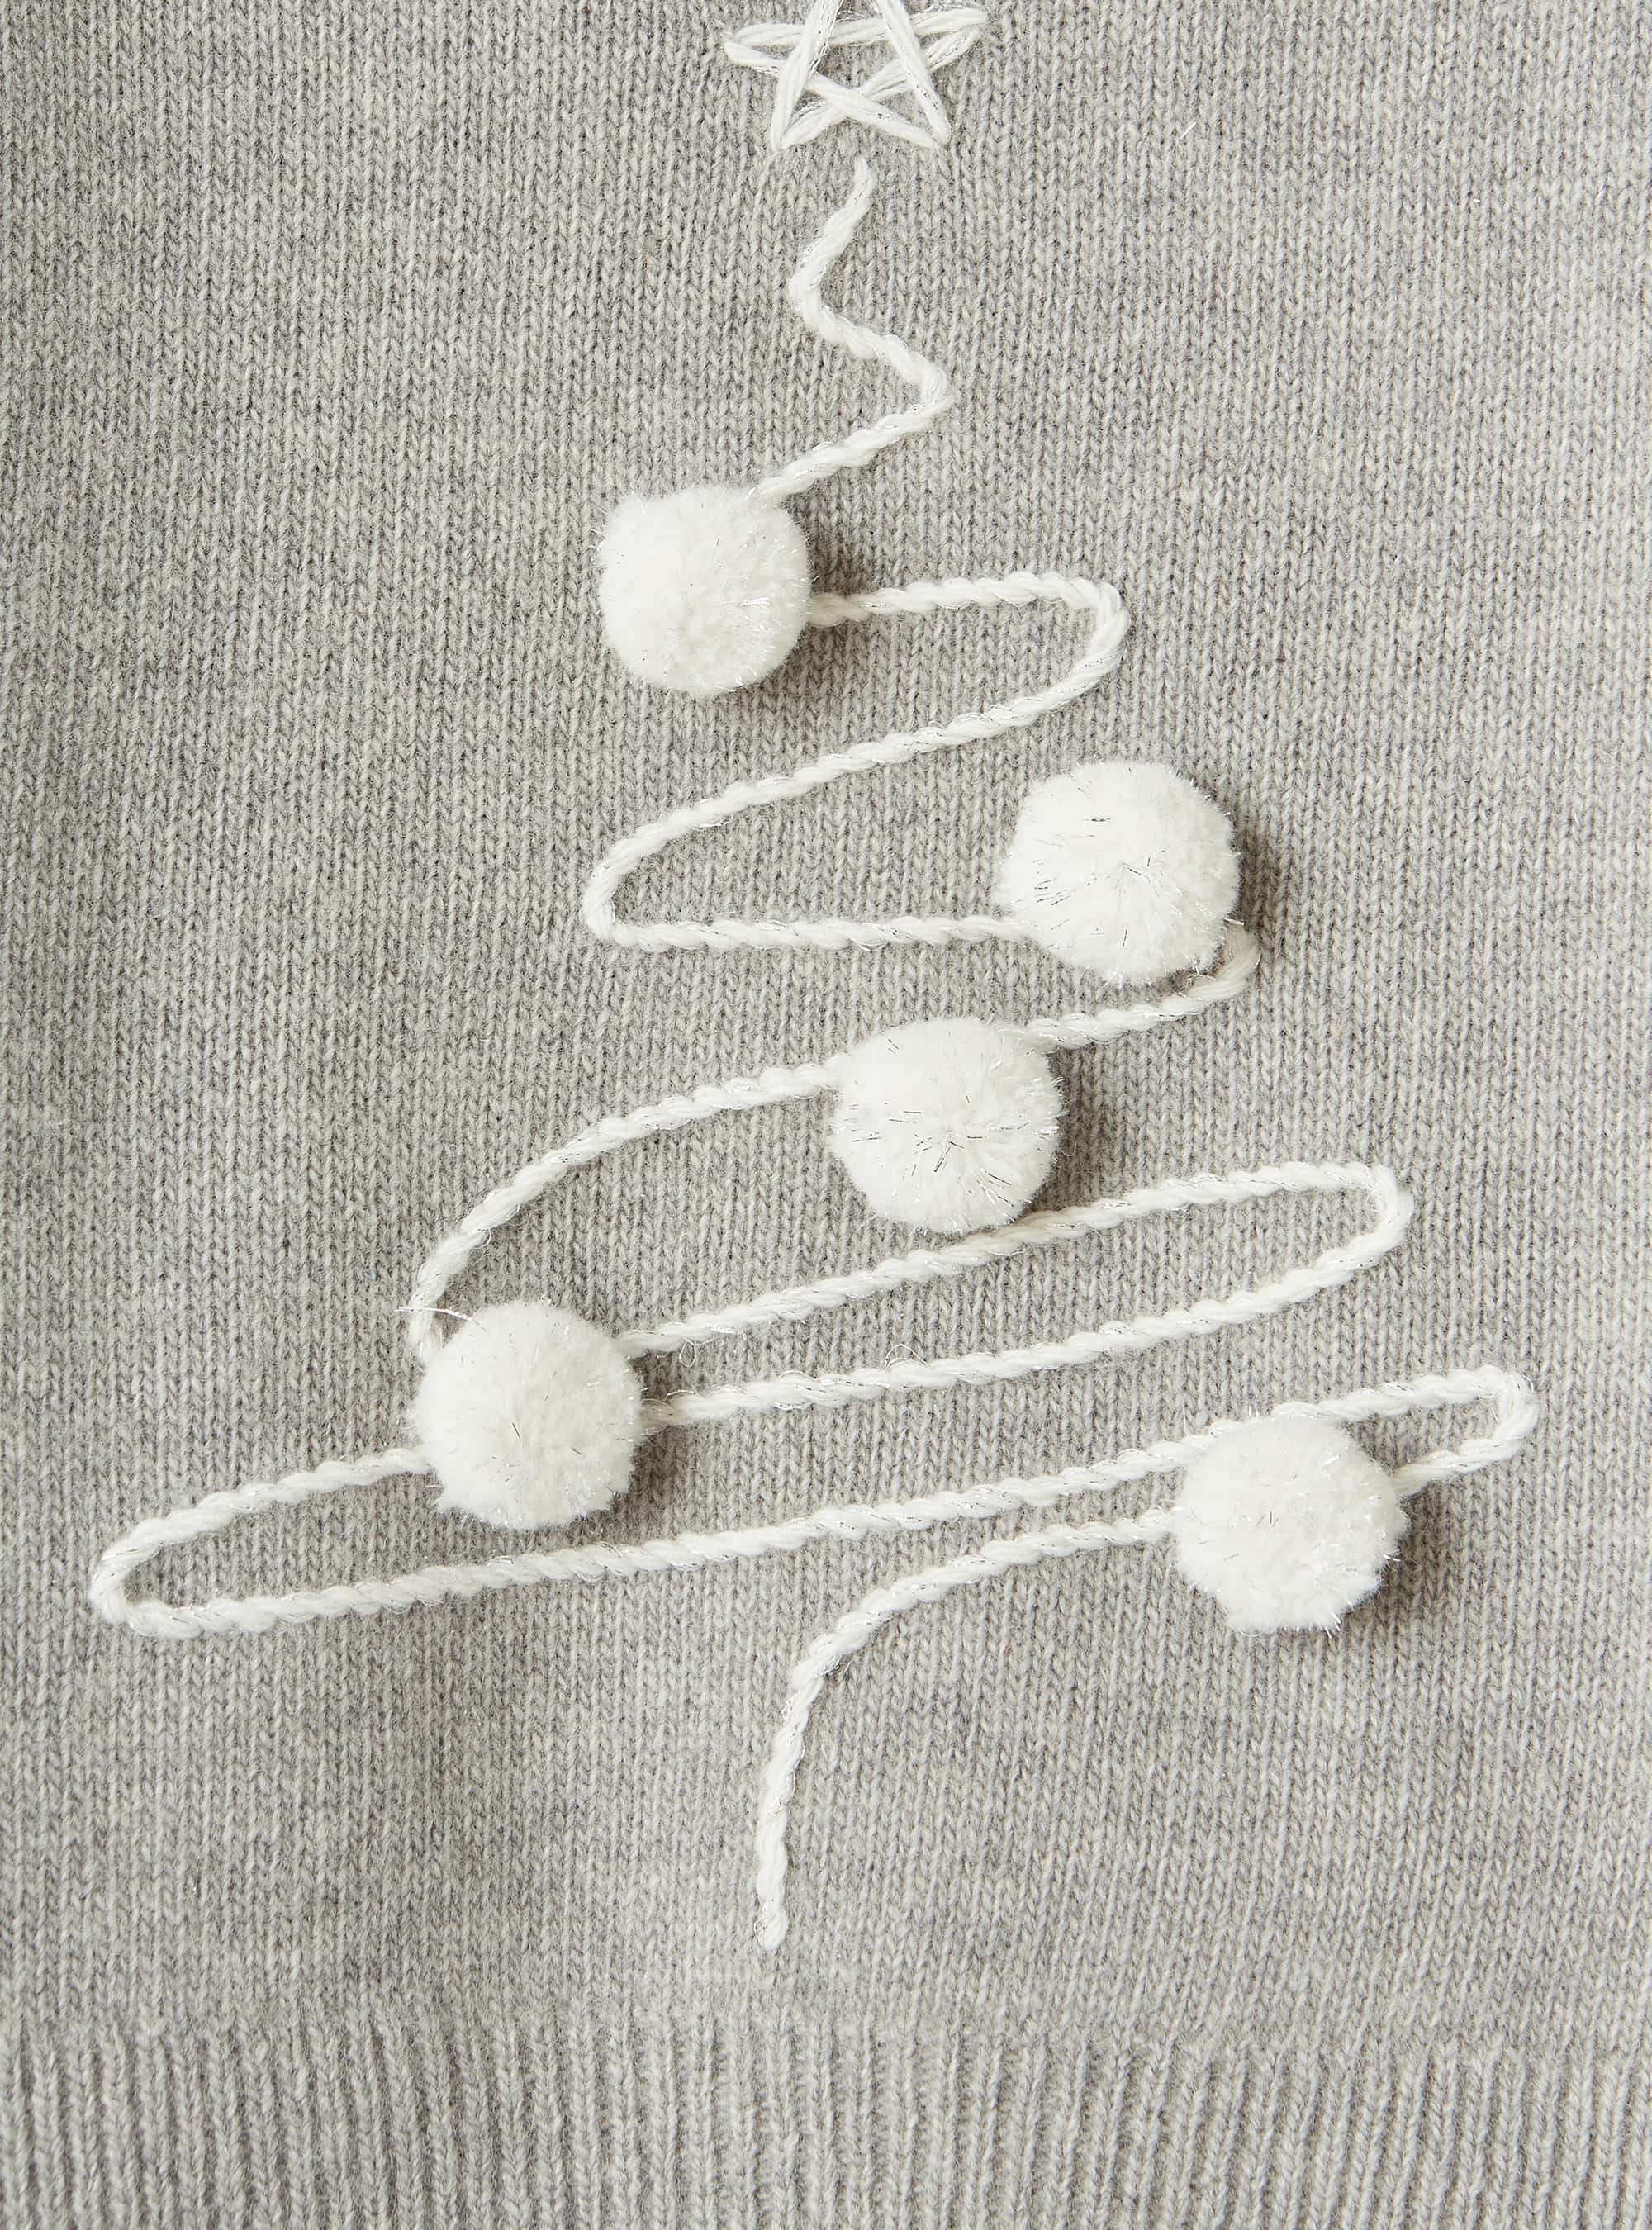 Christmas tree embroidery sweater - Grey | Il Gufo